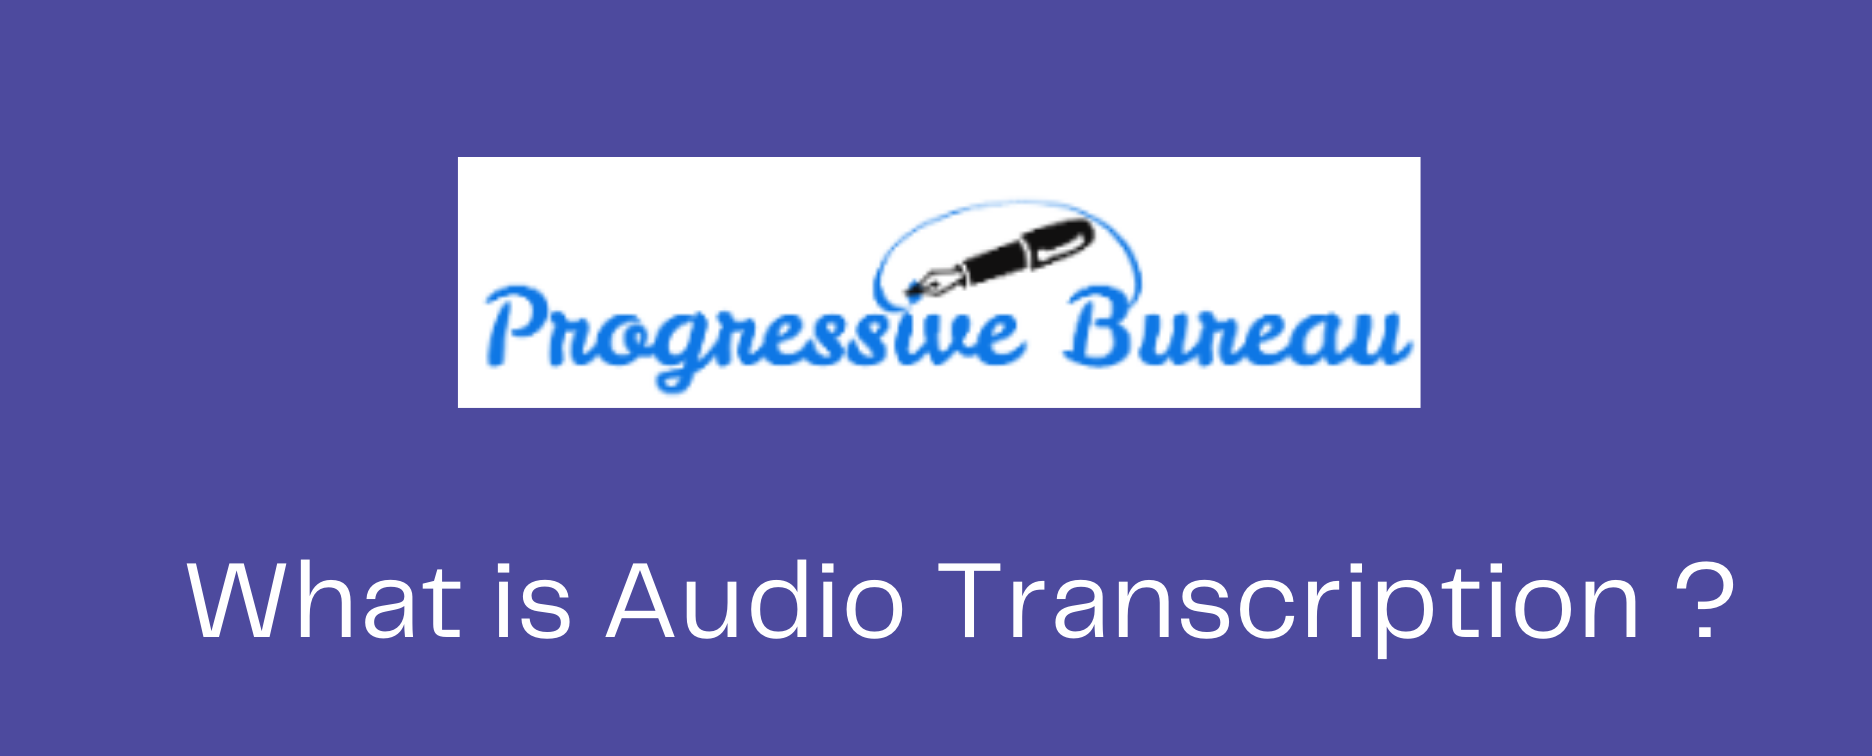 What is audio transcription